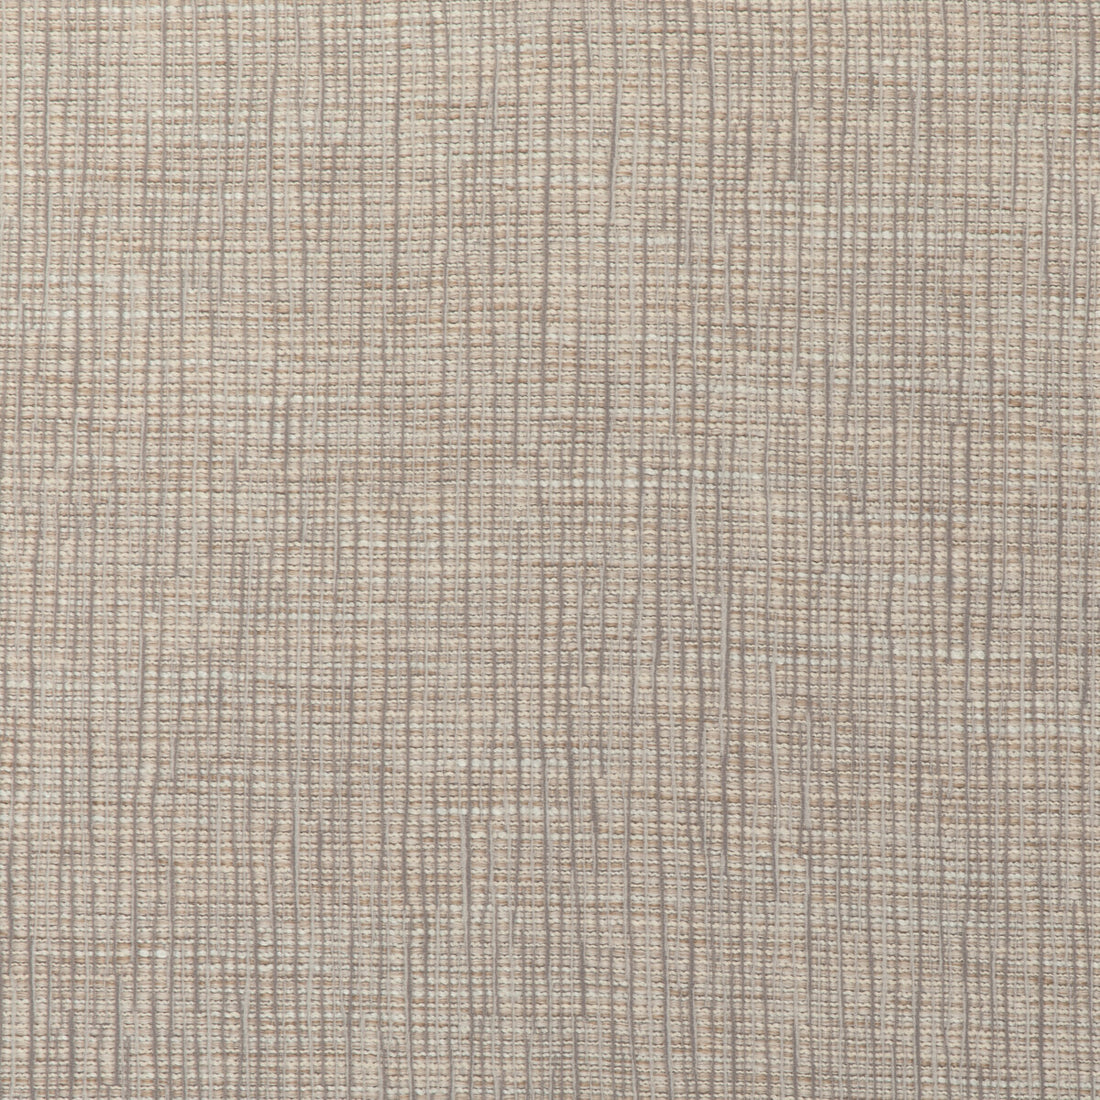 Kravet Smart fabric in 36668-16 color - pattern 36668.16.0 - by Kravet Smart in the Performance Kravetarmor collection